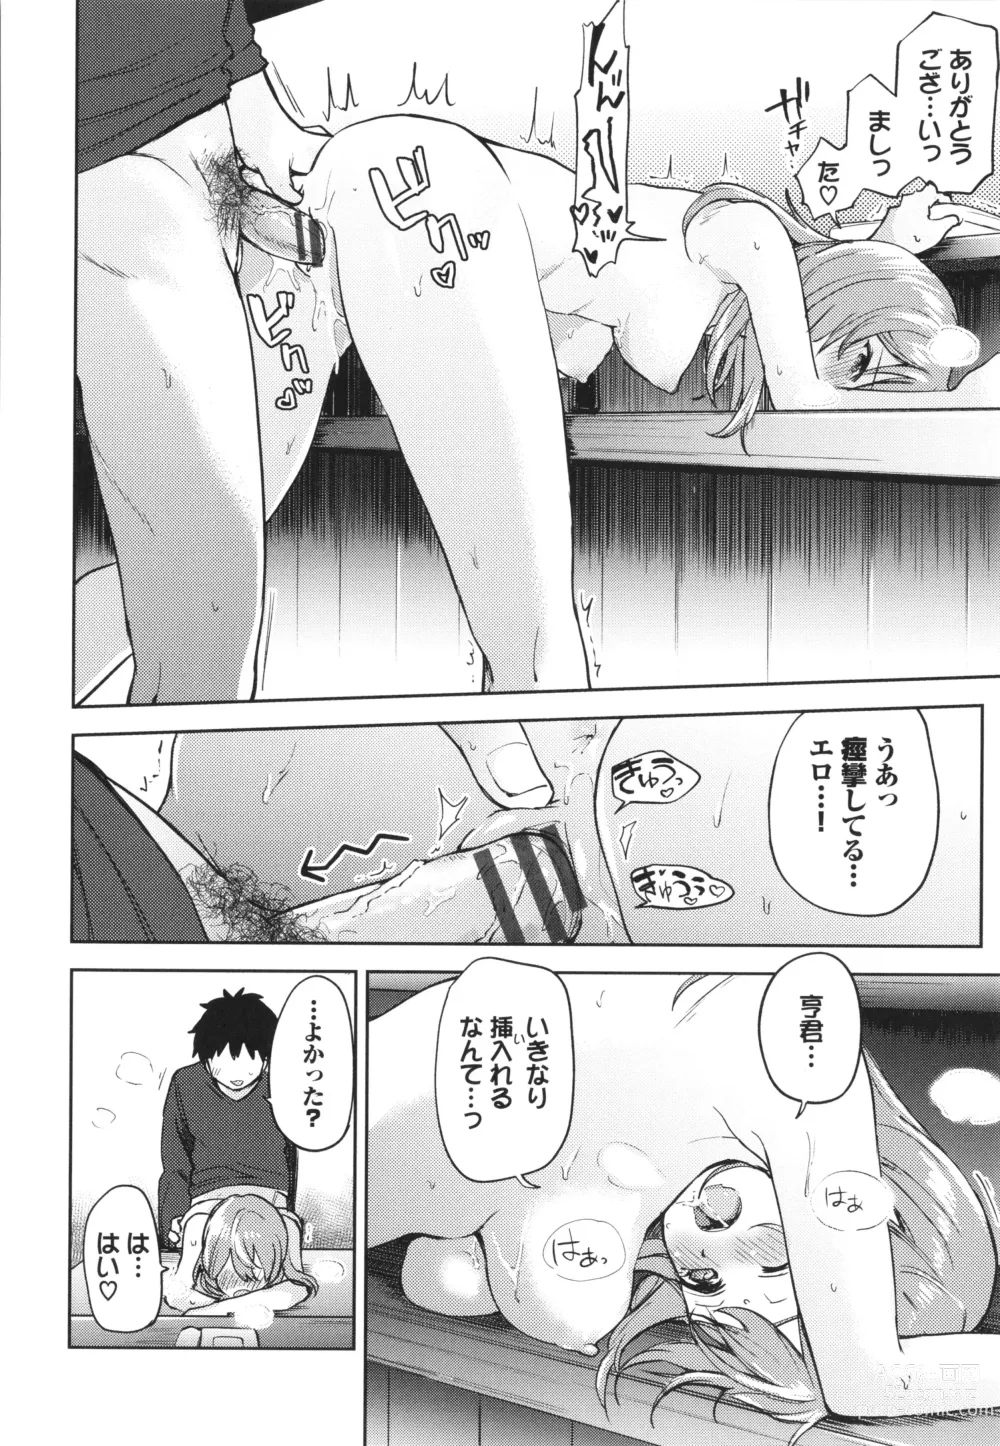 Page 187 of manga Secret Time